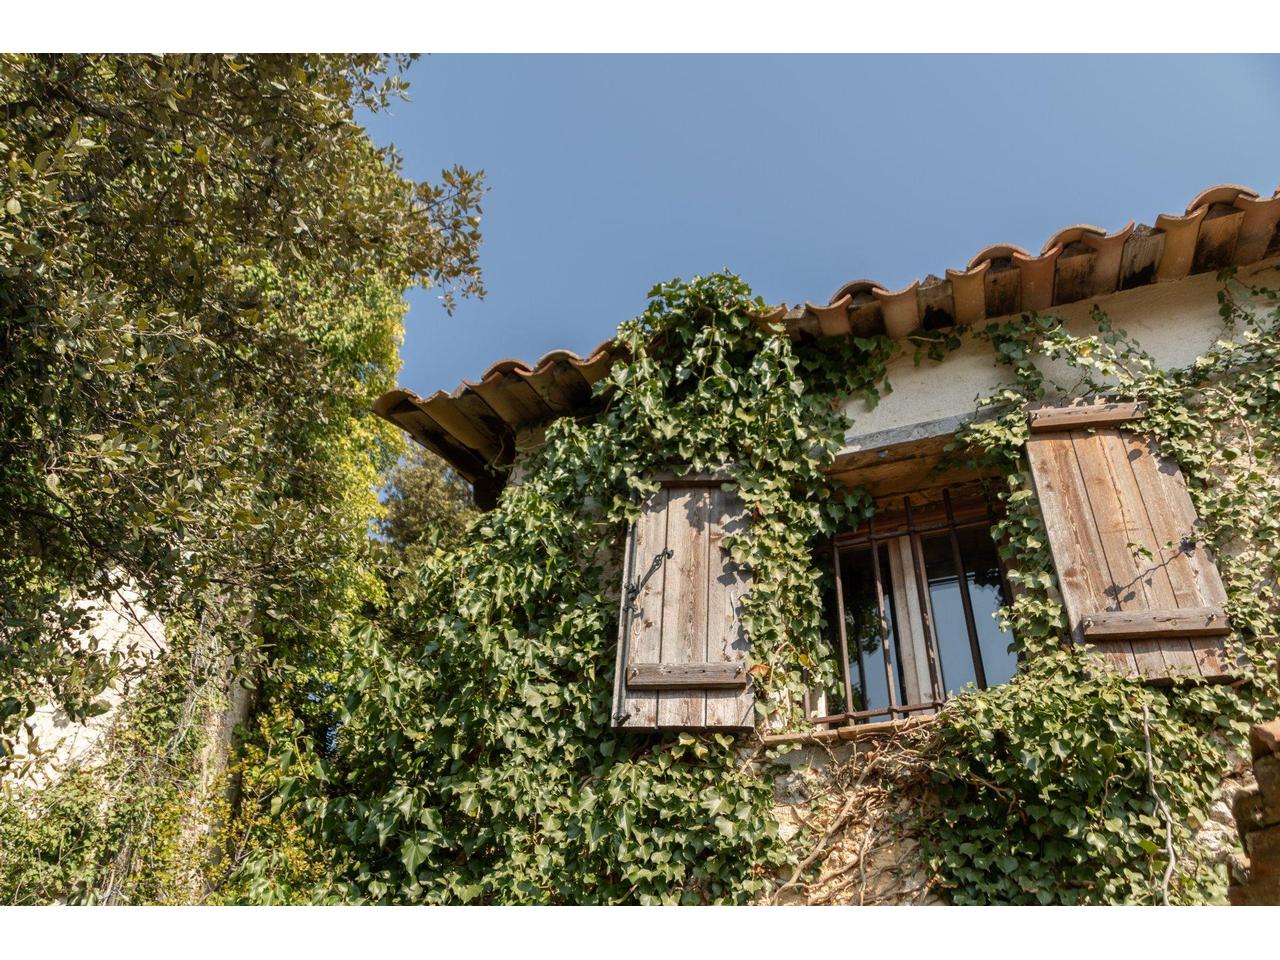 Nice Riviera - Agence Immobiliére Nice Côte d'Azur | Maison  4 Rooms 81.65m2  for sale   650 000 €